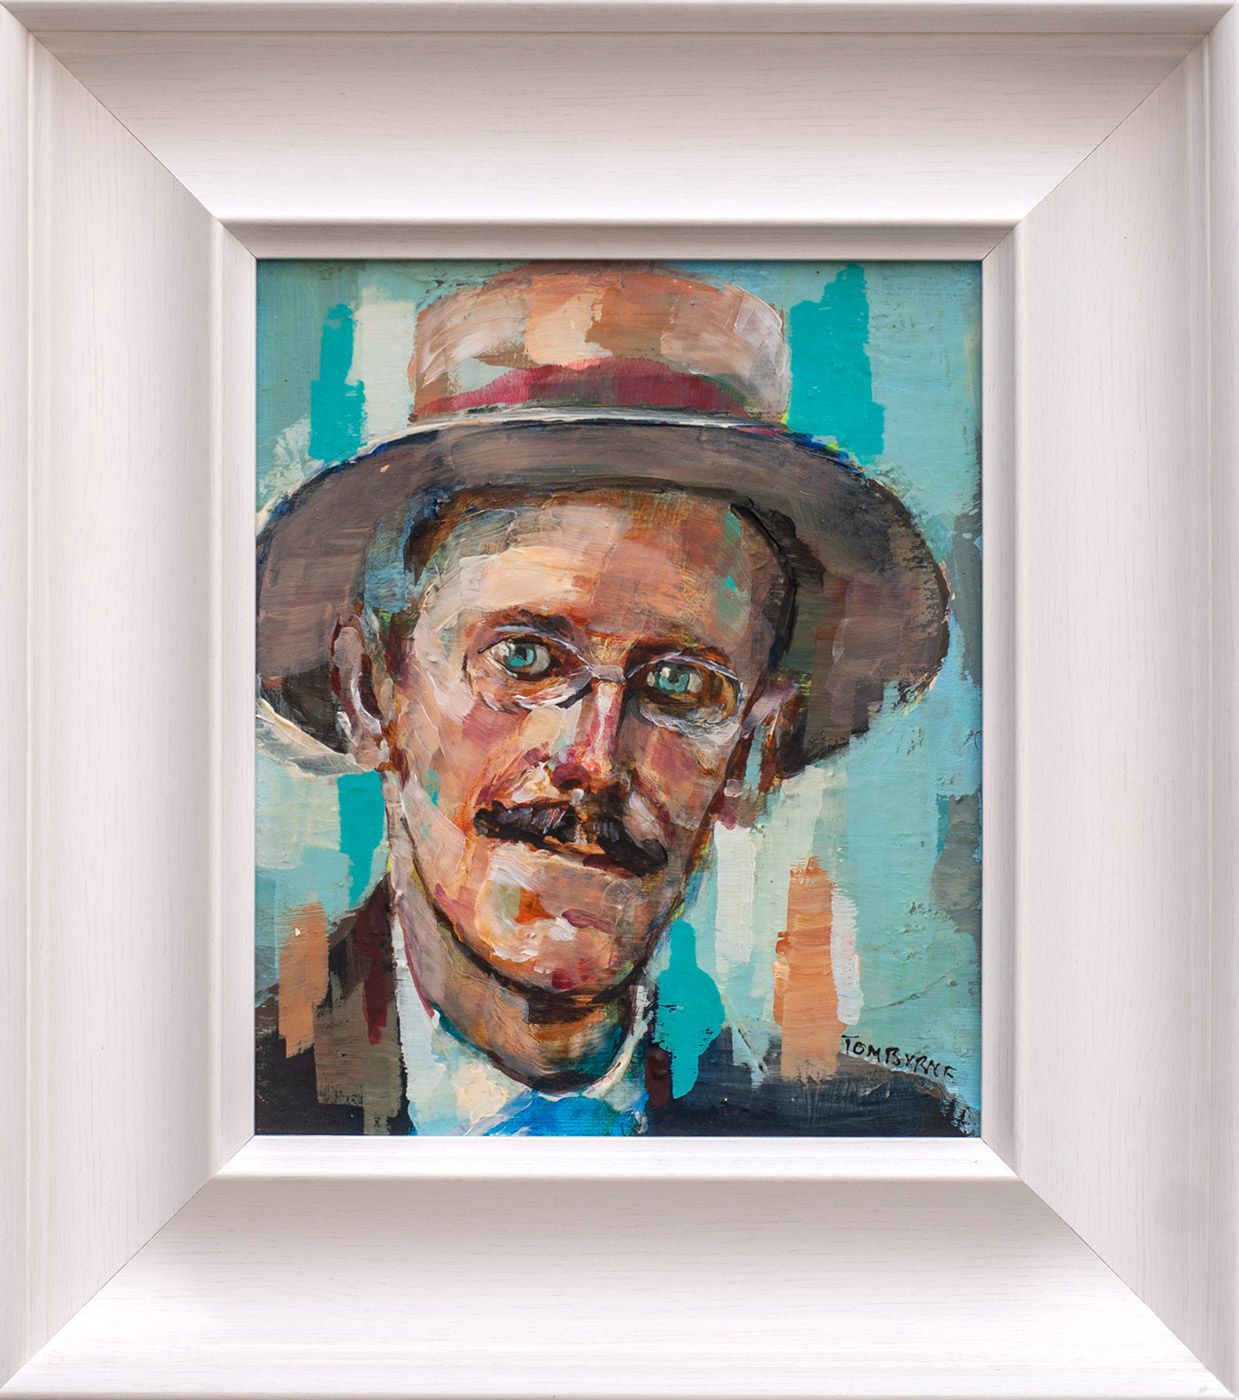 A Glance of James Joyce by Tom Byrne